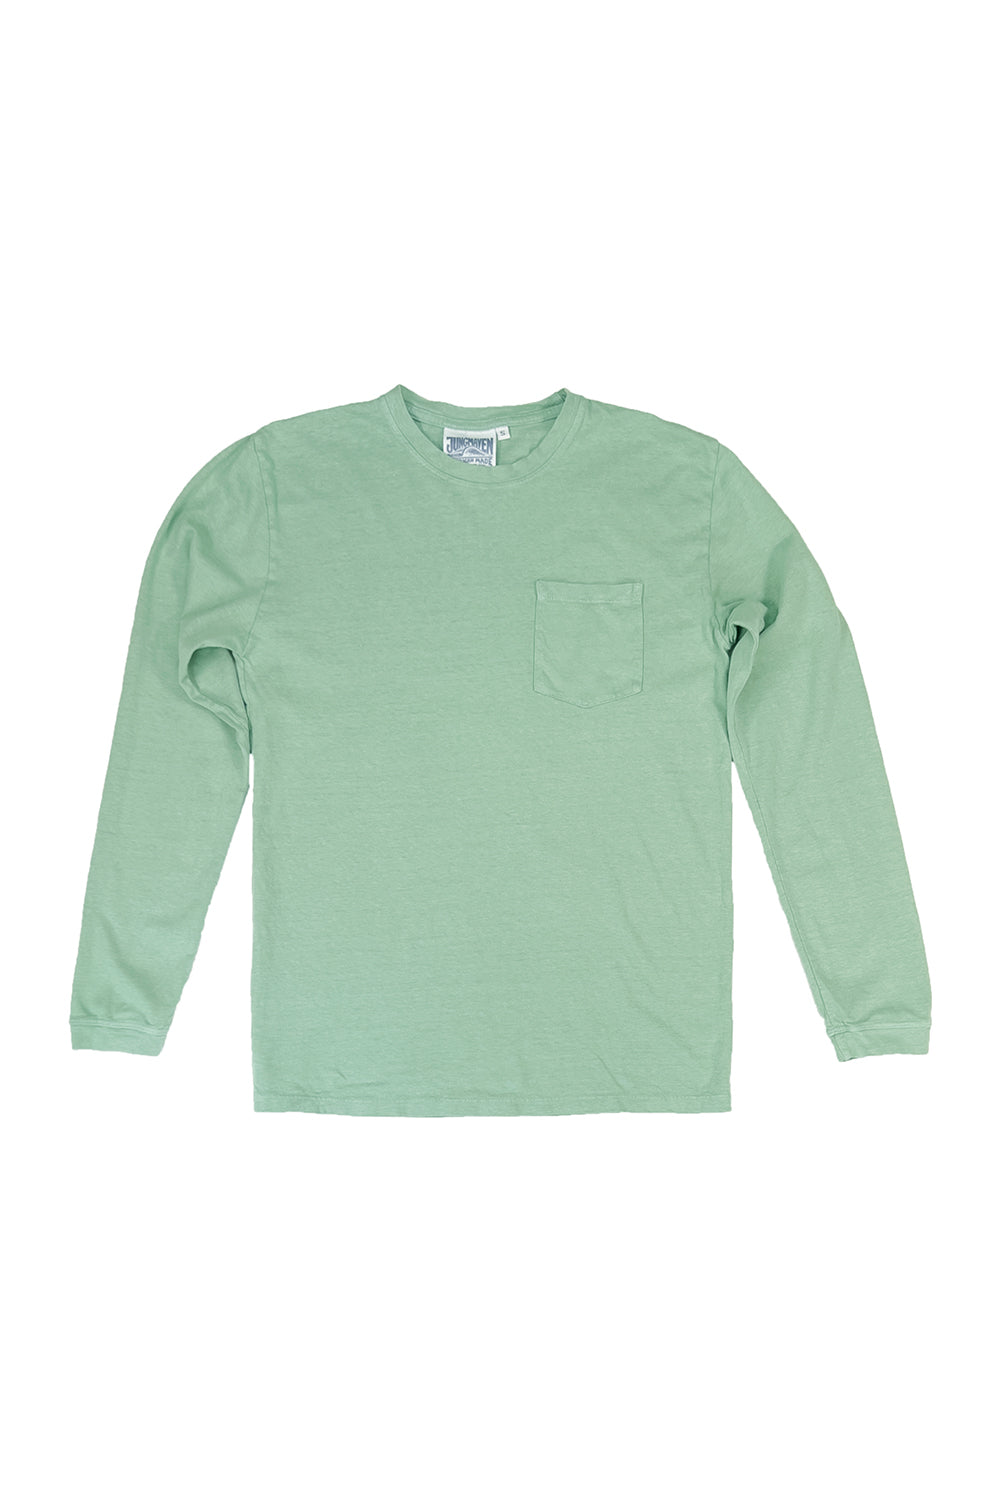 Baja Long Sleeve Pocket Tee | Jungmaven Hemp Clothing & Accessories / Color: Sage Green